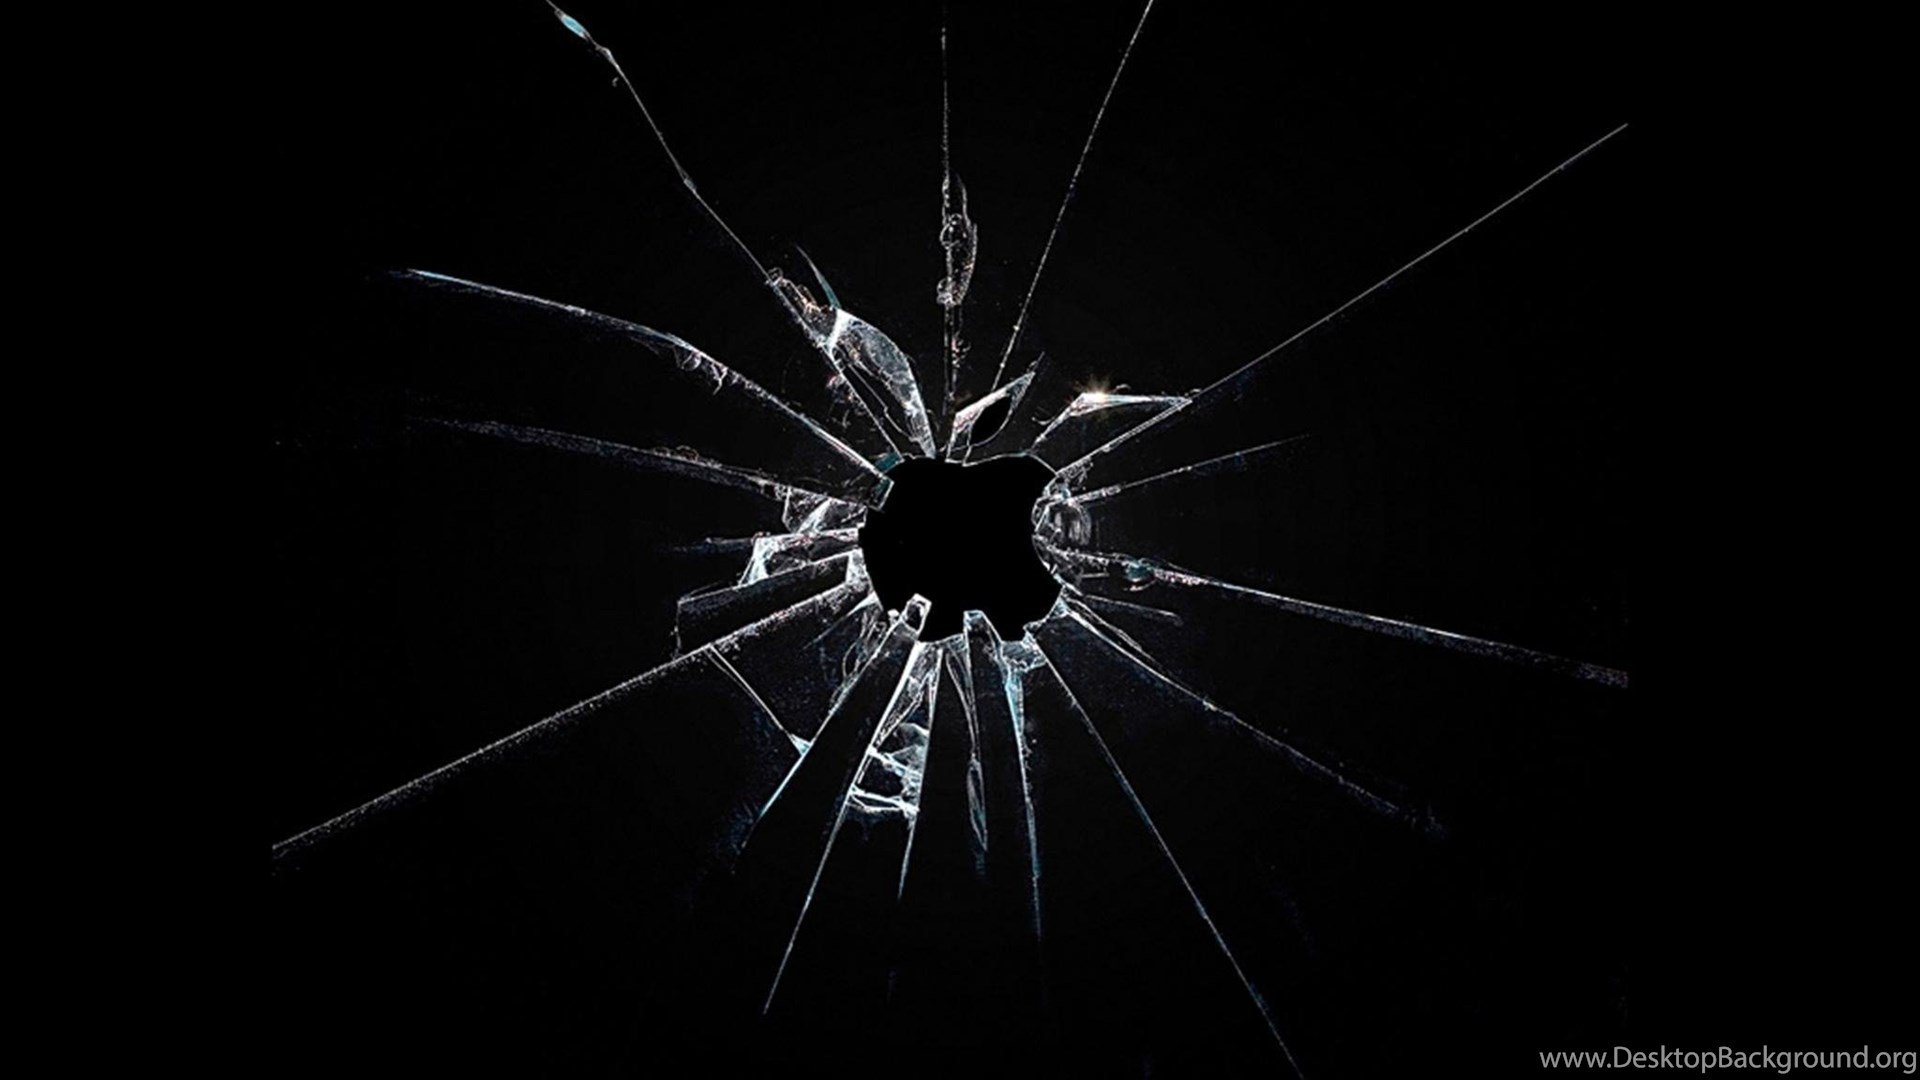 Обои разбитого стекла. Разбитое стекло. Треснувшее стекло. Разбитое стекло на черном фоне. Разбитое стекло текстура.